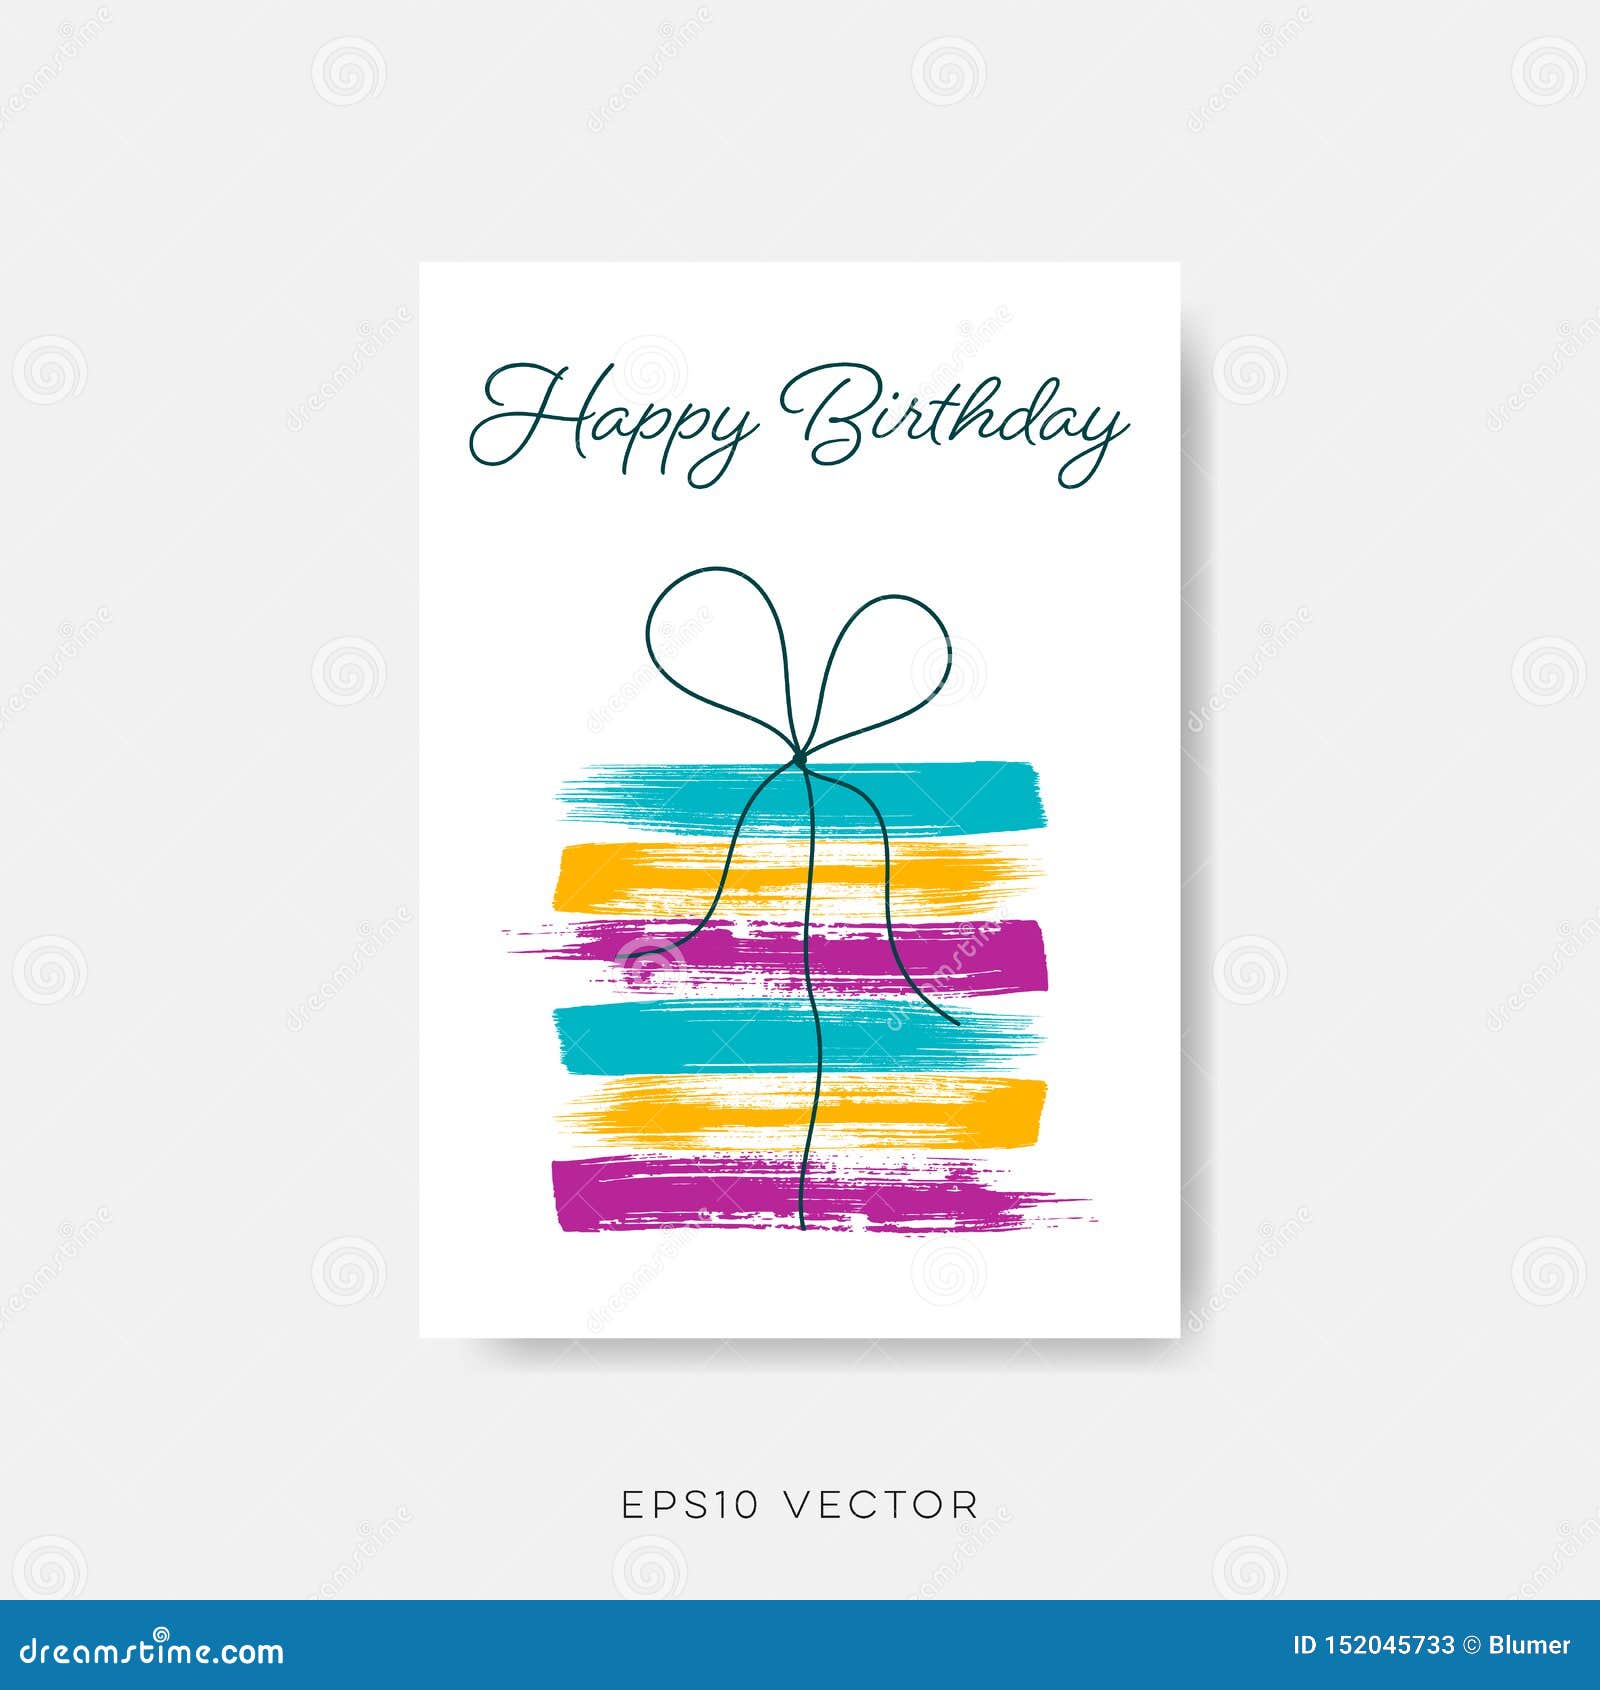 Birthday Card | Creative birthday cards, Happy birthday cards diy, Birthday  card drawing